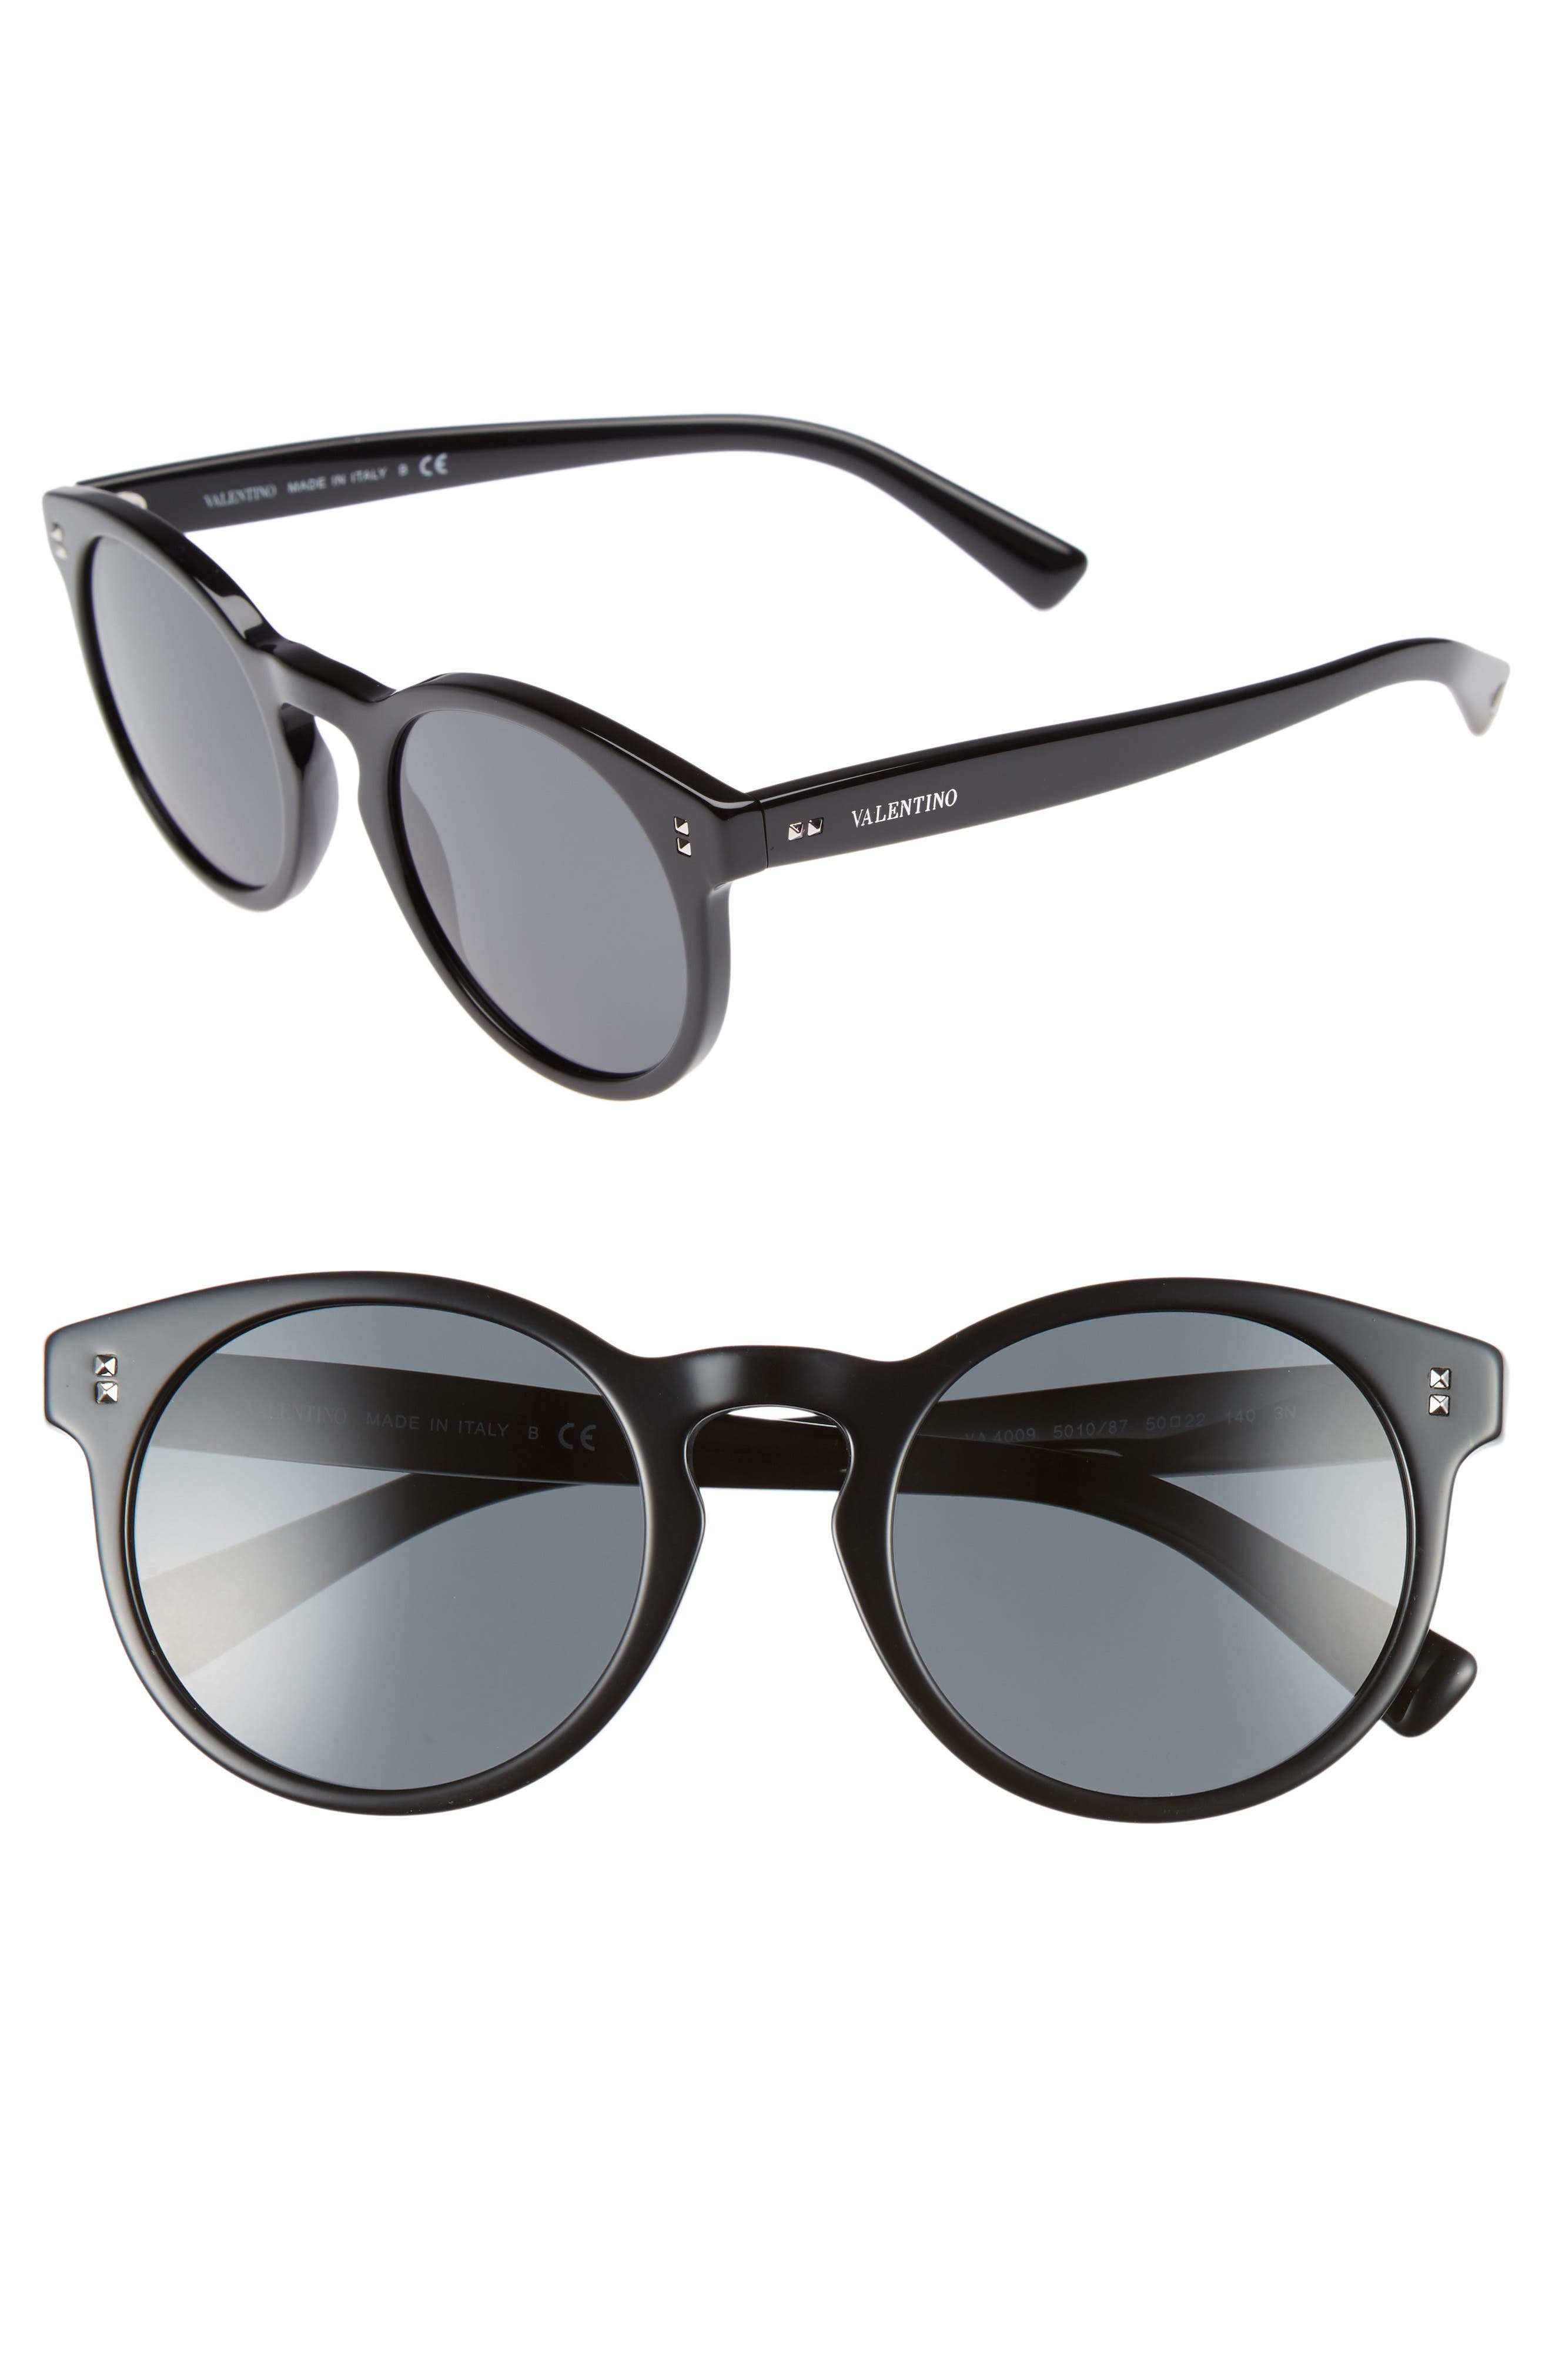 Valentino 50mm Retro Sunglasses in Black at Nordstrom